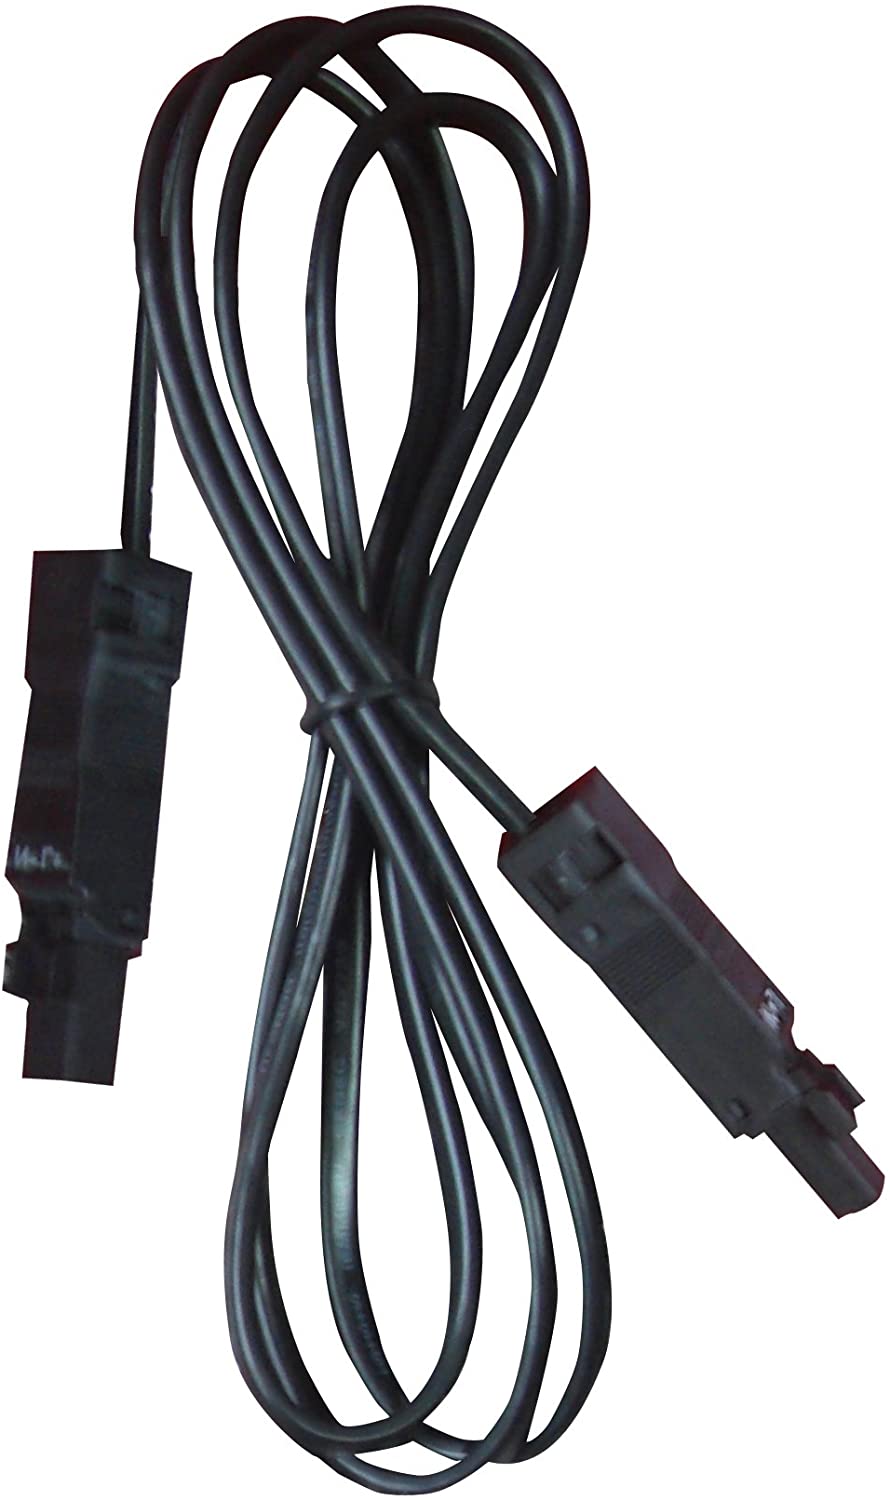 Cable Extender PRO 200 cm